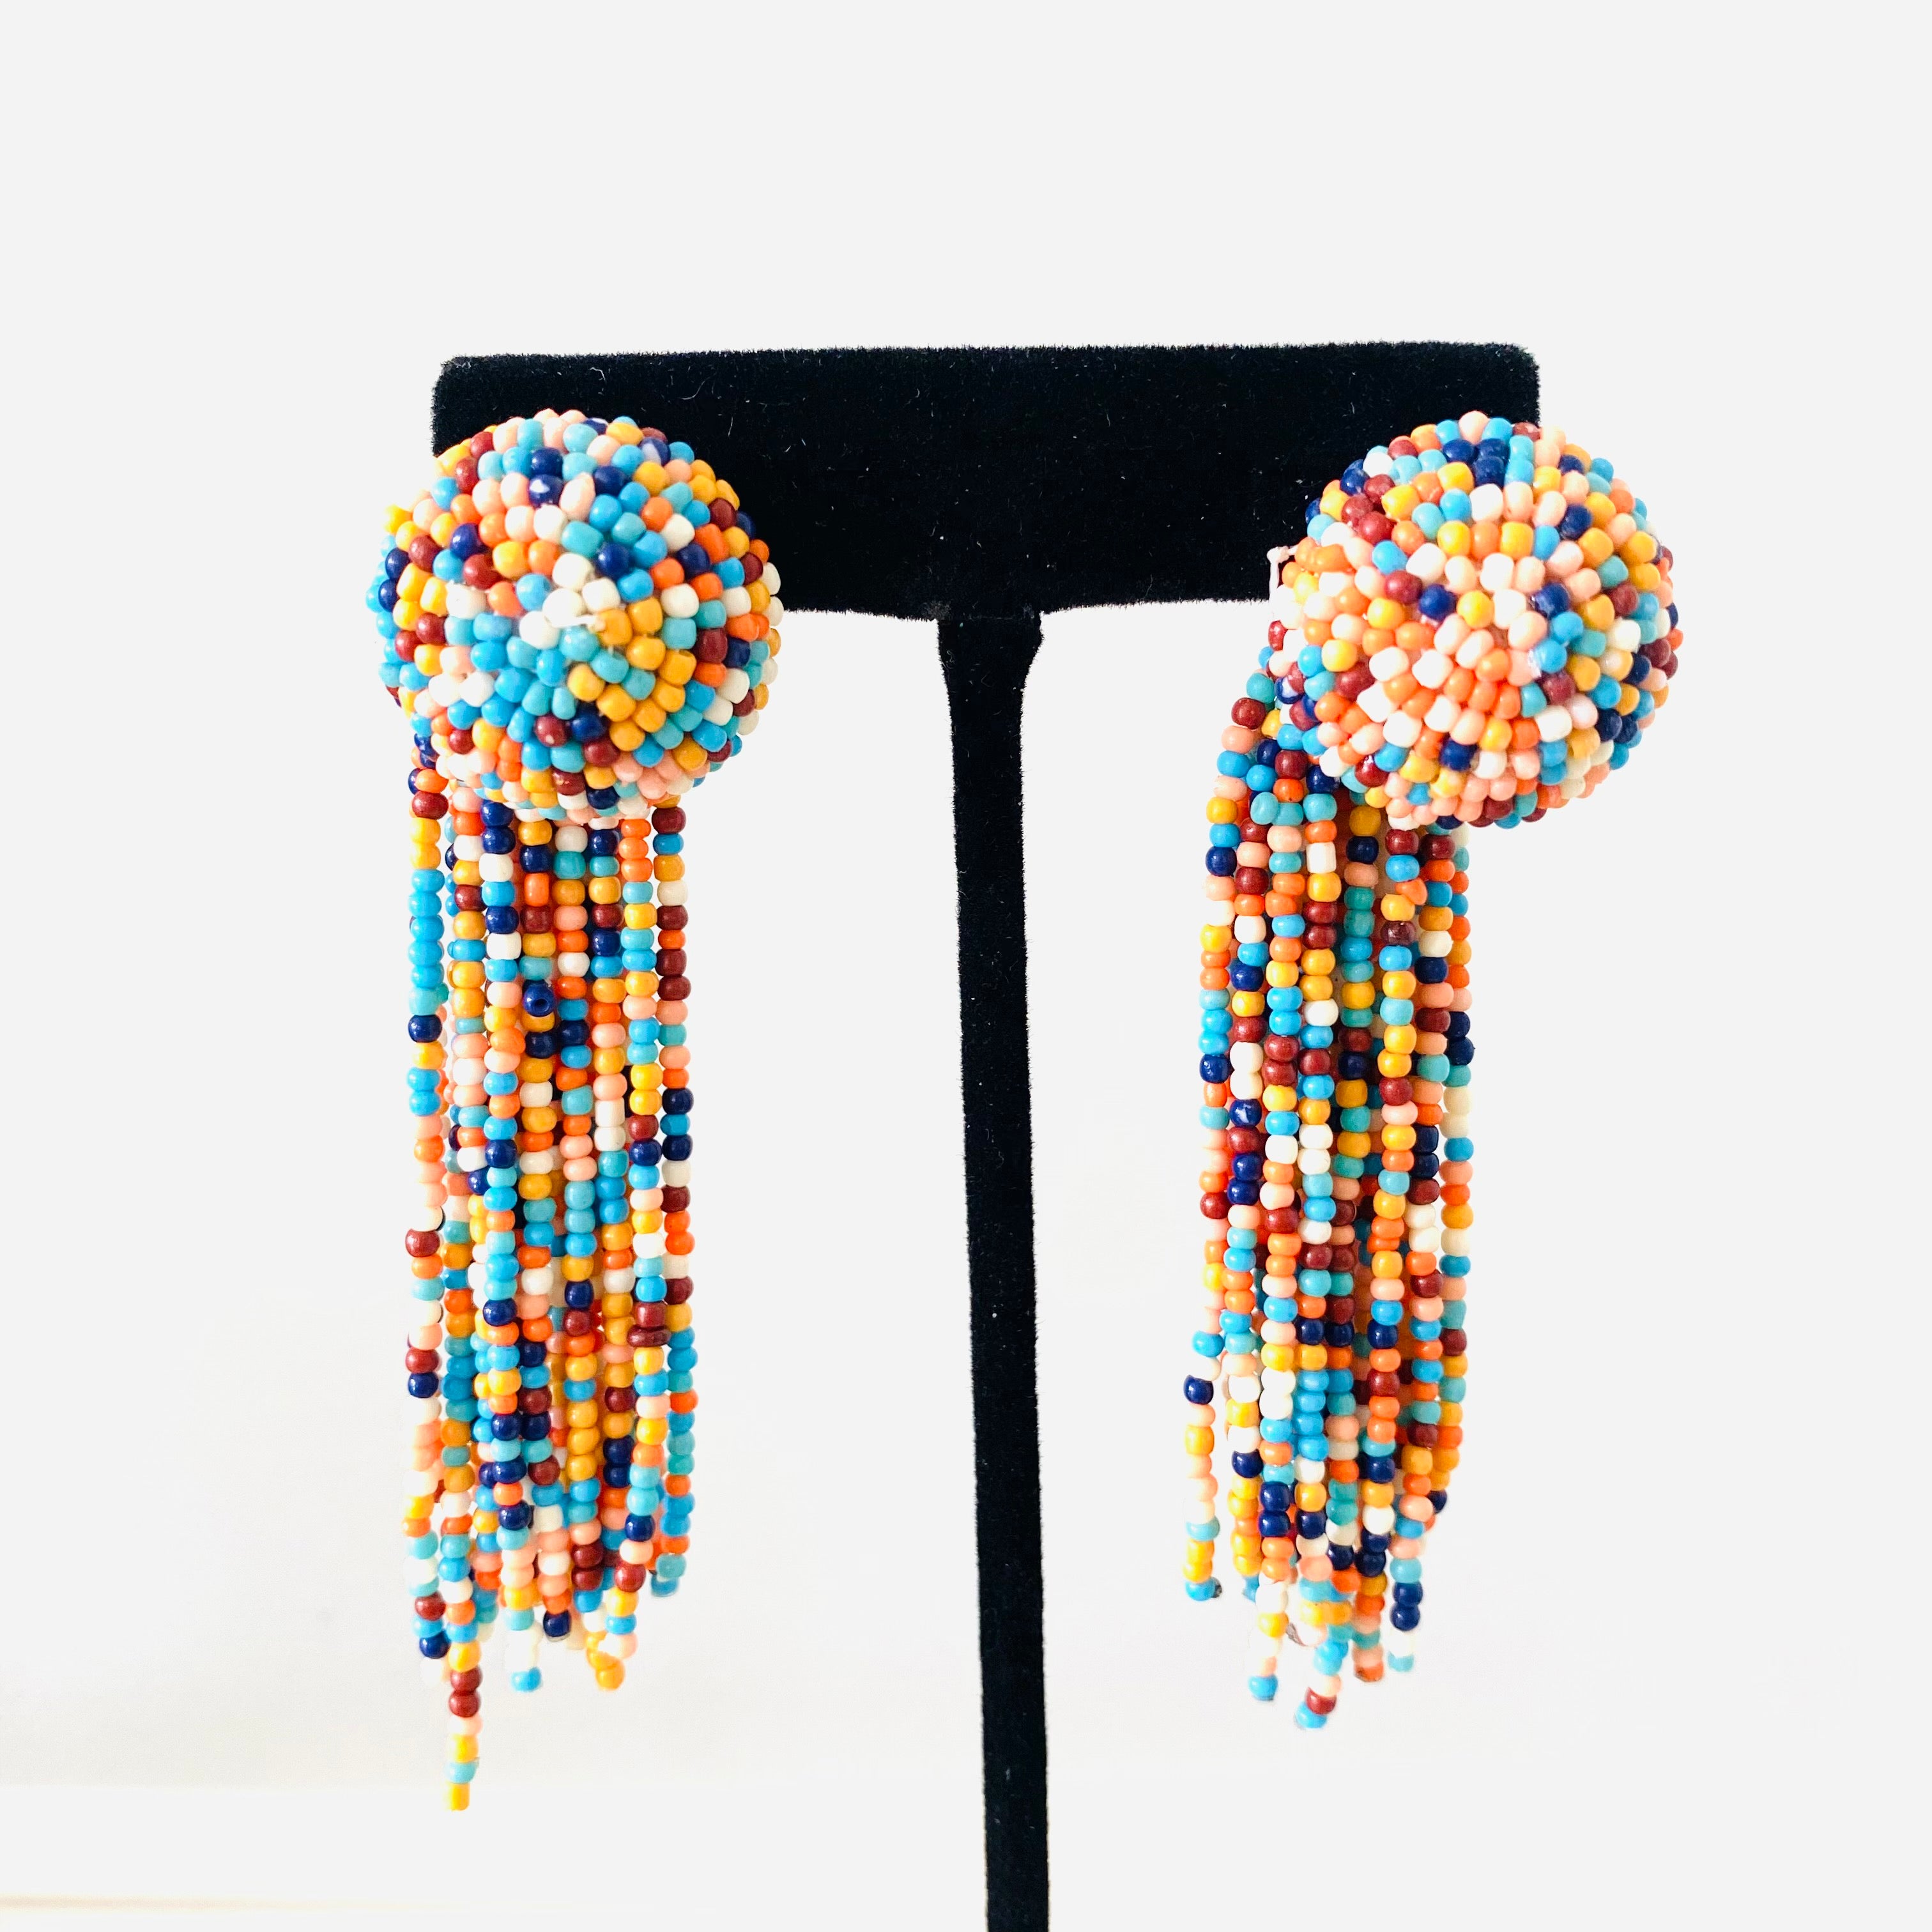 Beaded Tassel Earrings